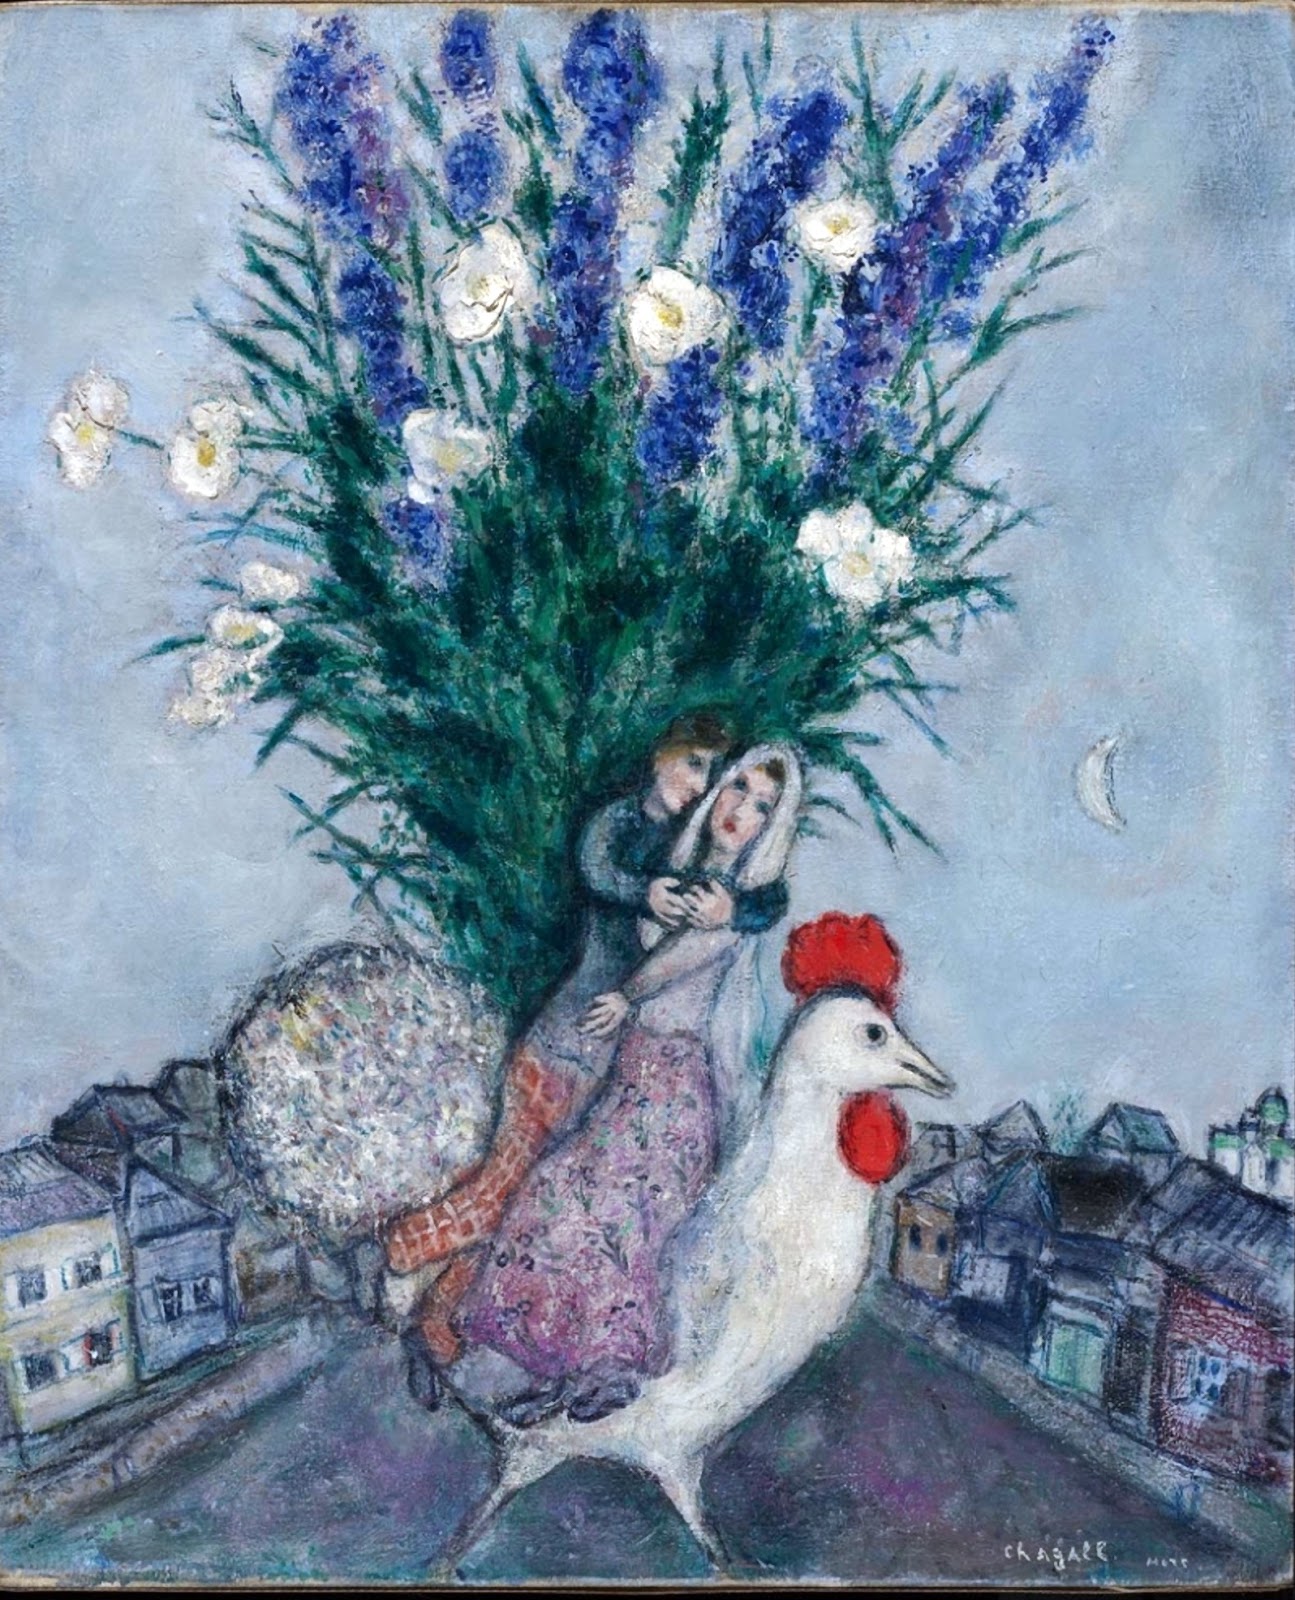 Marc+Chagall-1887-1985 (421).jpg